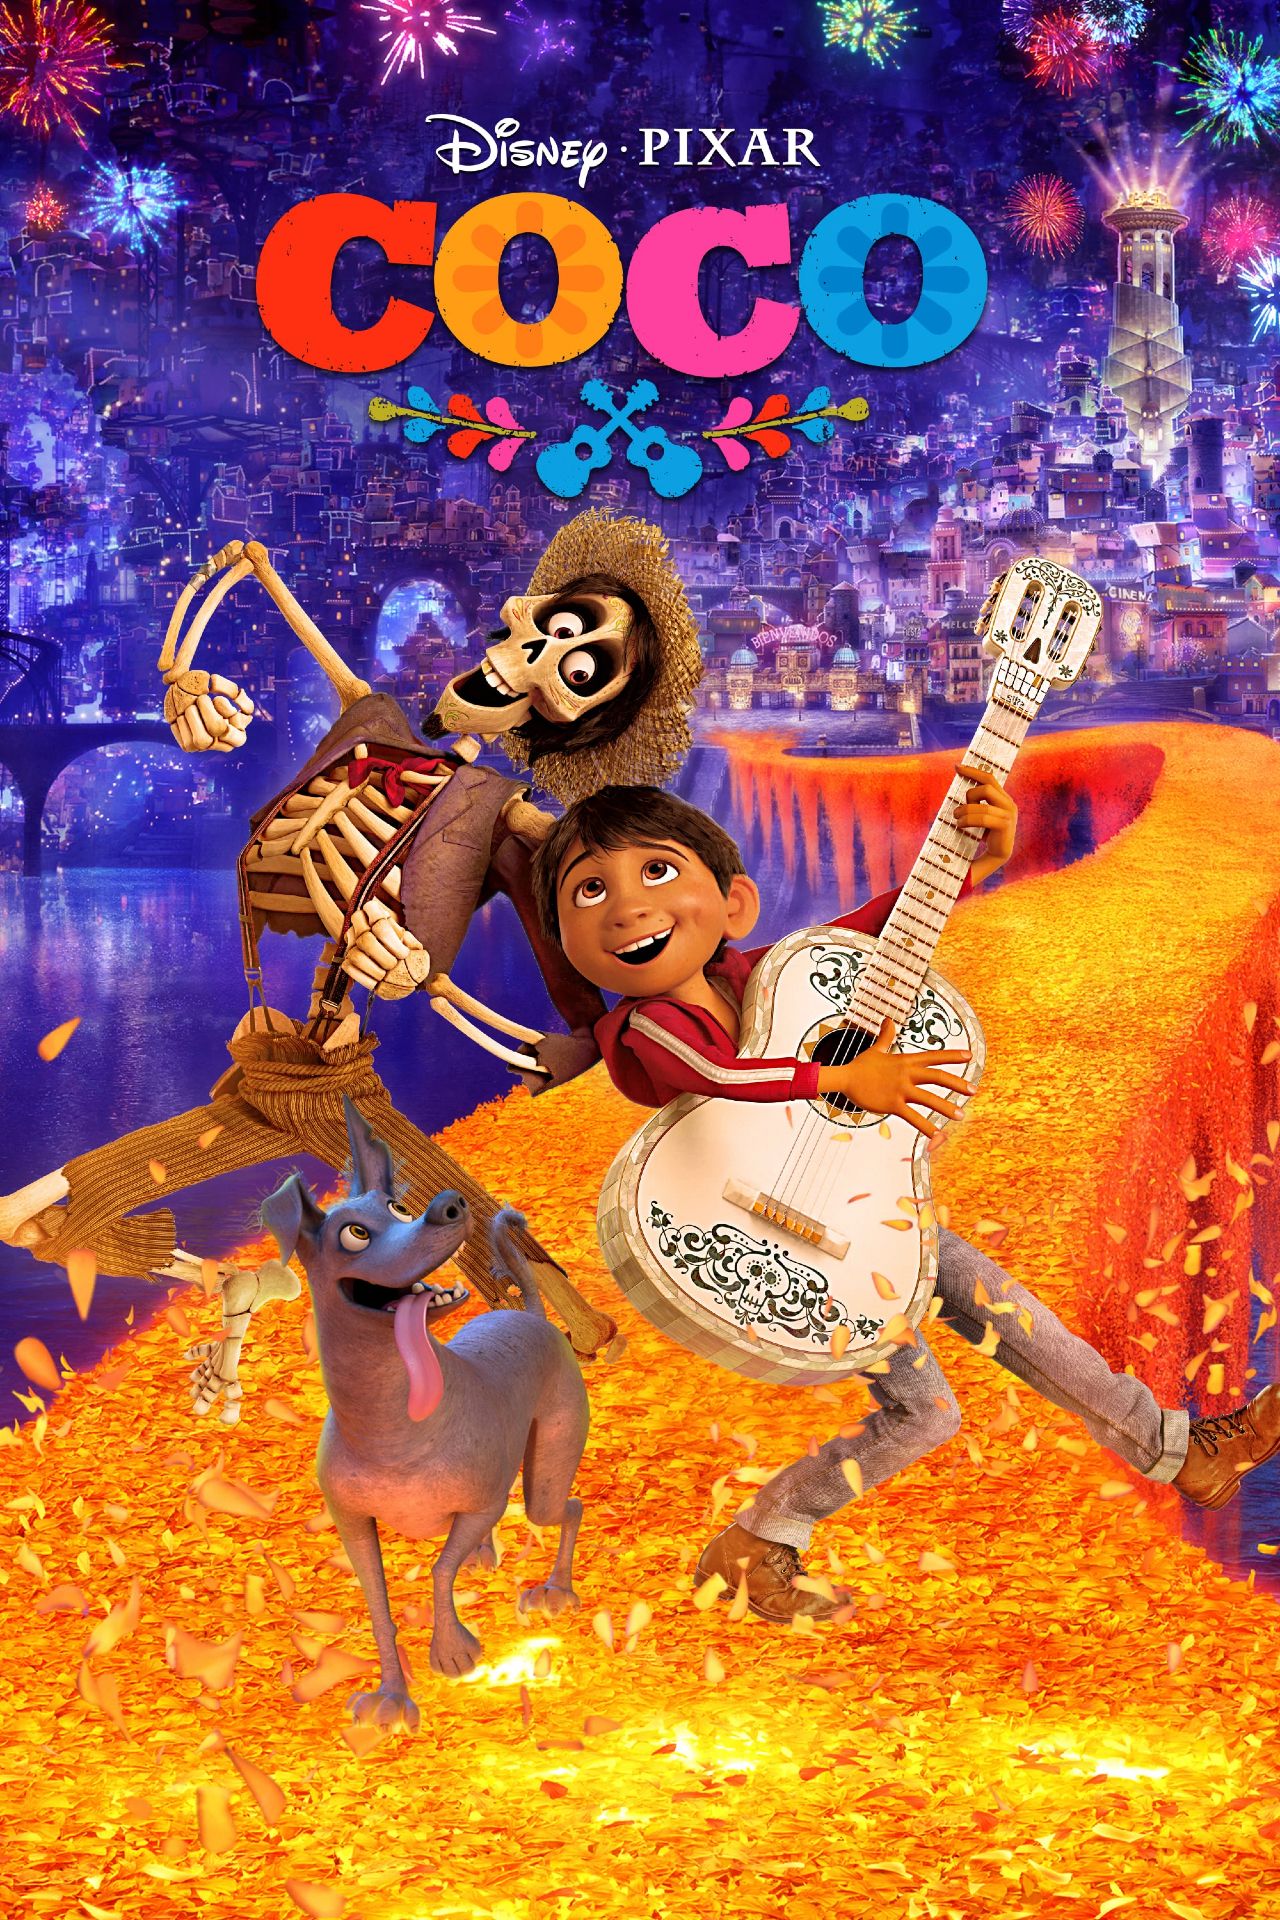 Disney/Pixar’s Coco: First Trailer Arrives Tomorrow